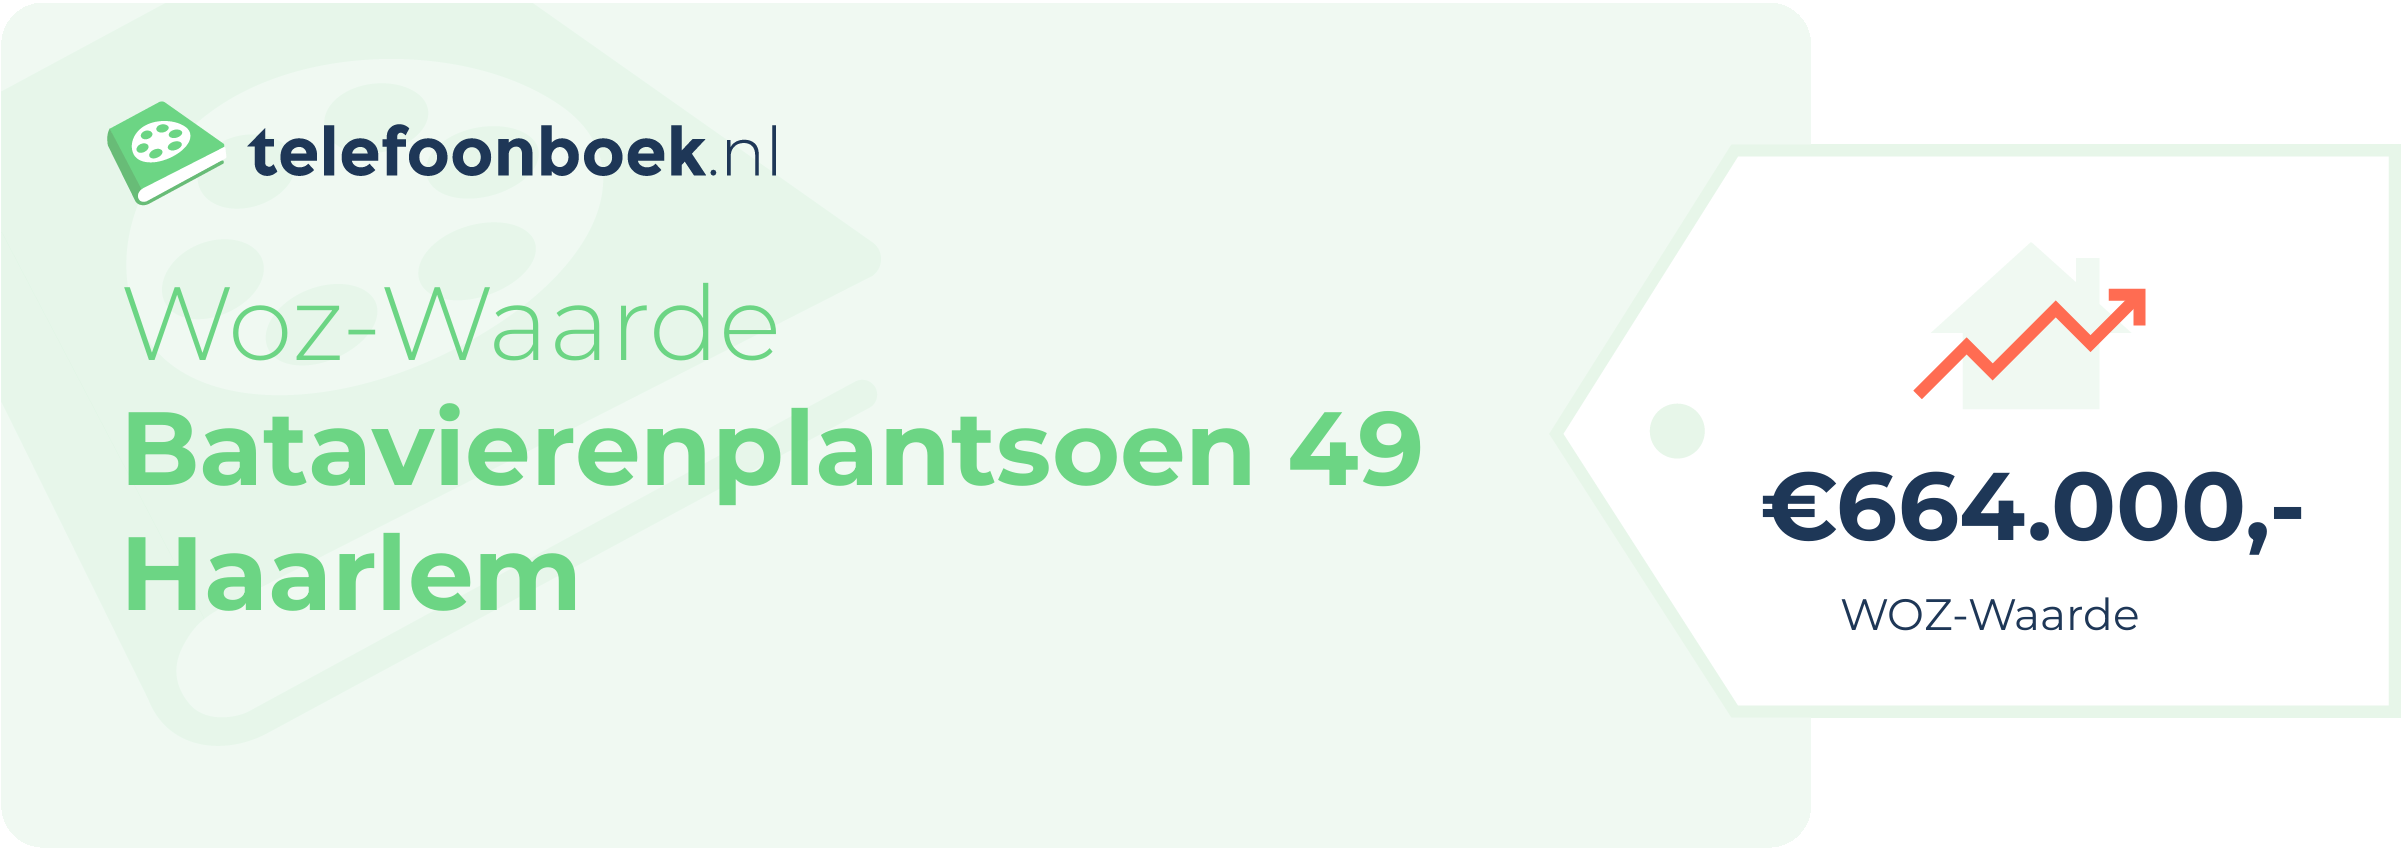 WOZ-waarde Batavierenplantsoen 49 Haarlem